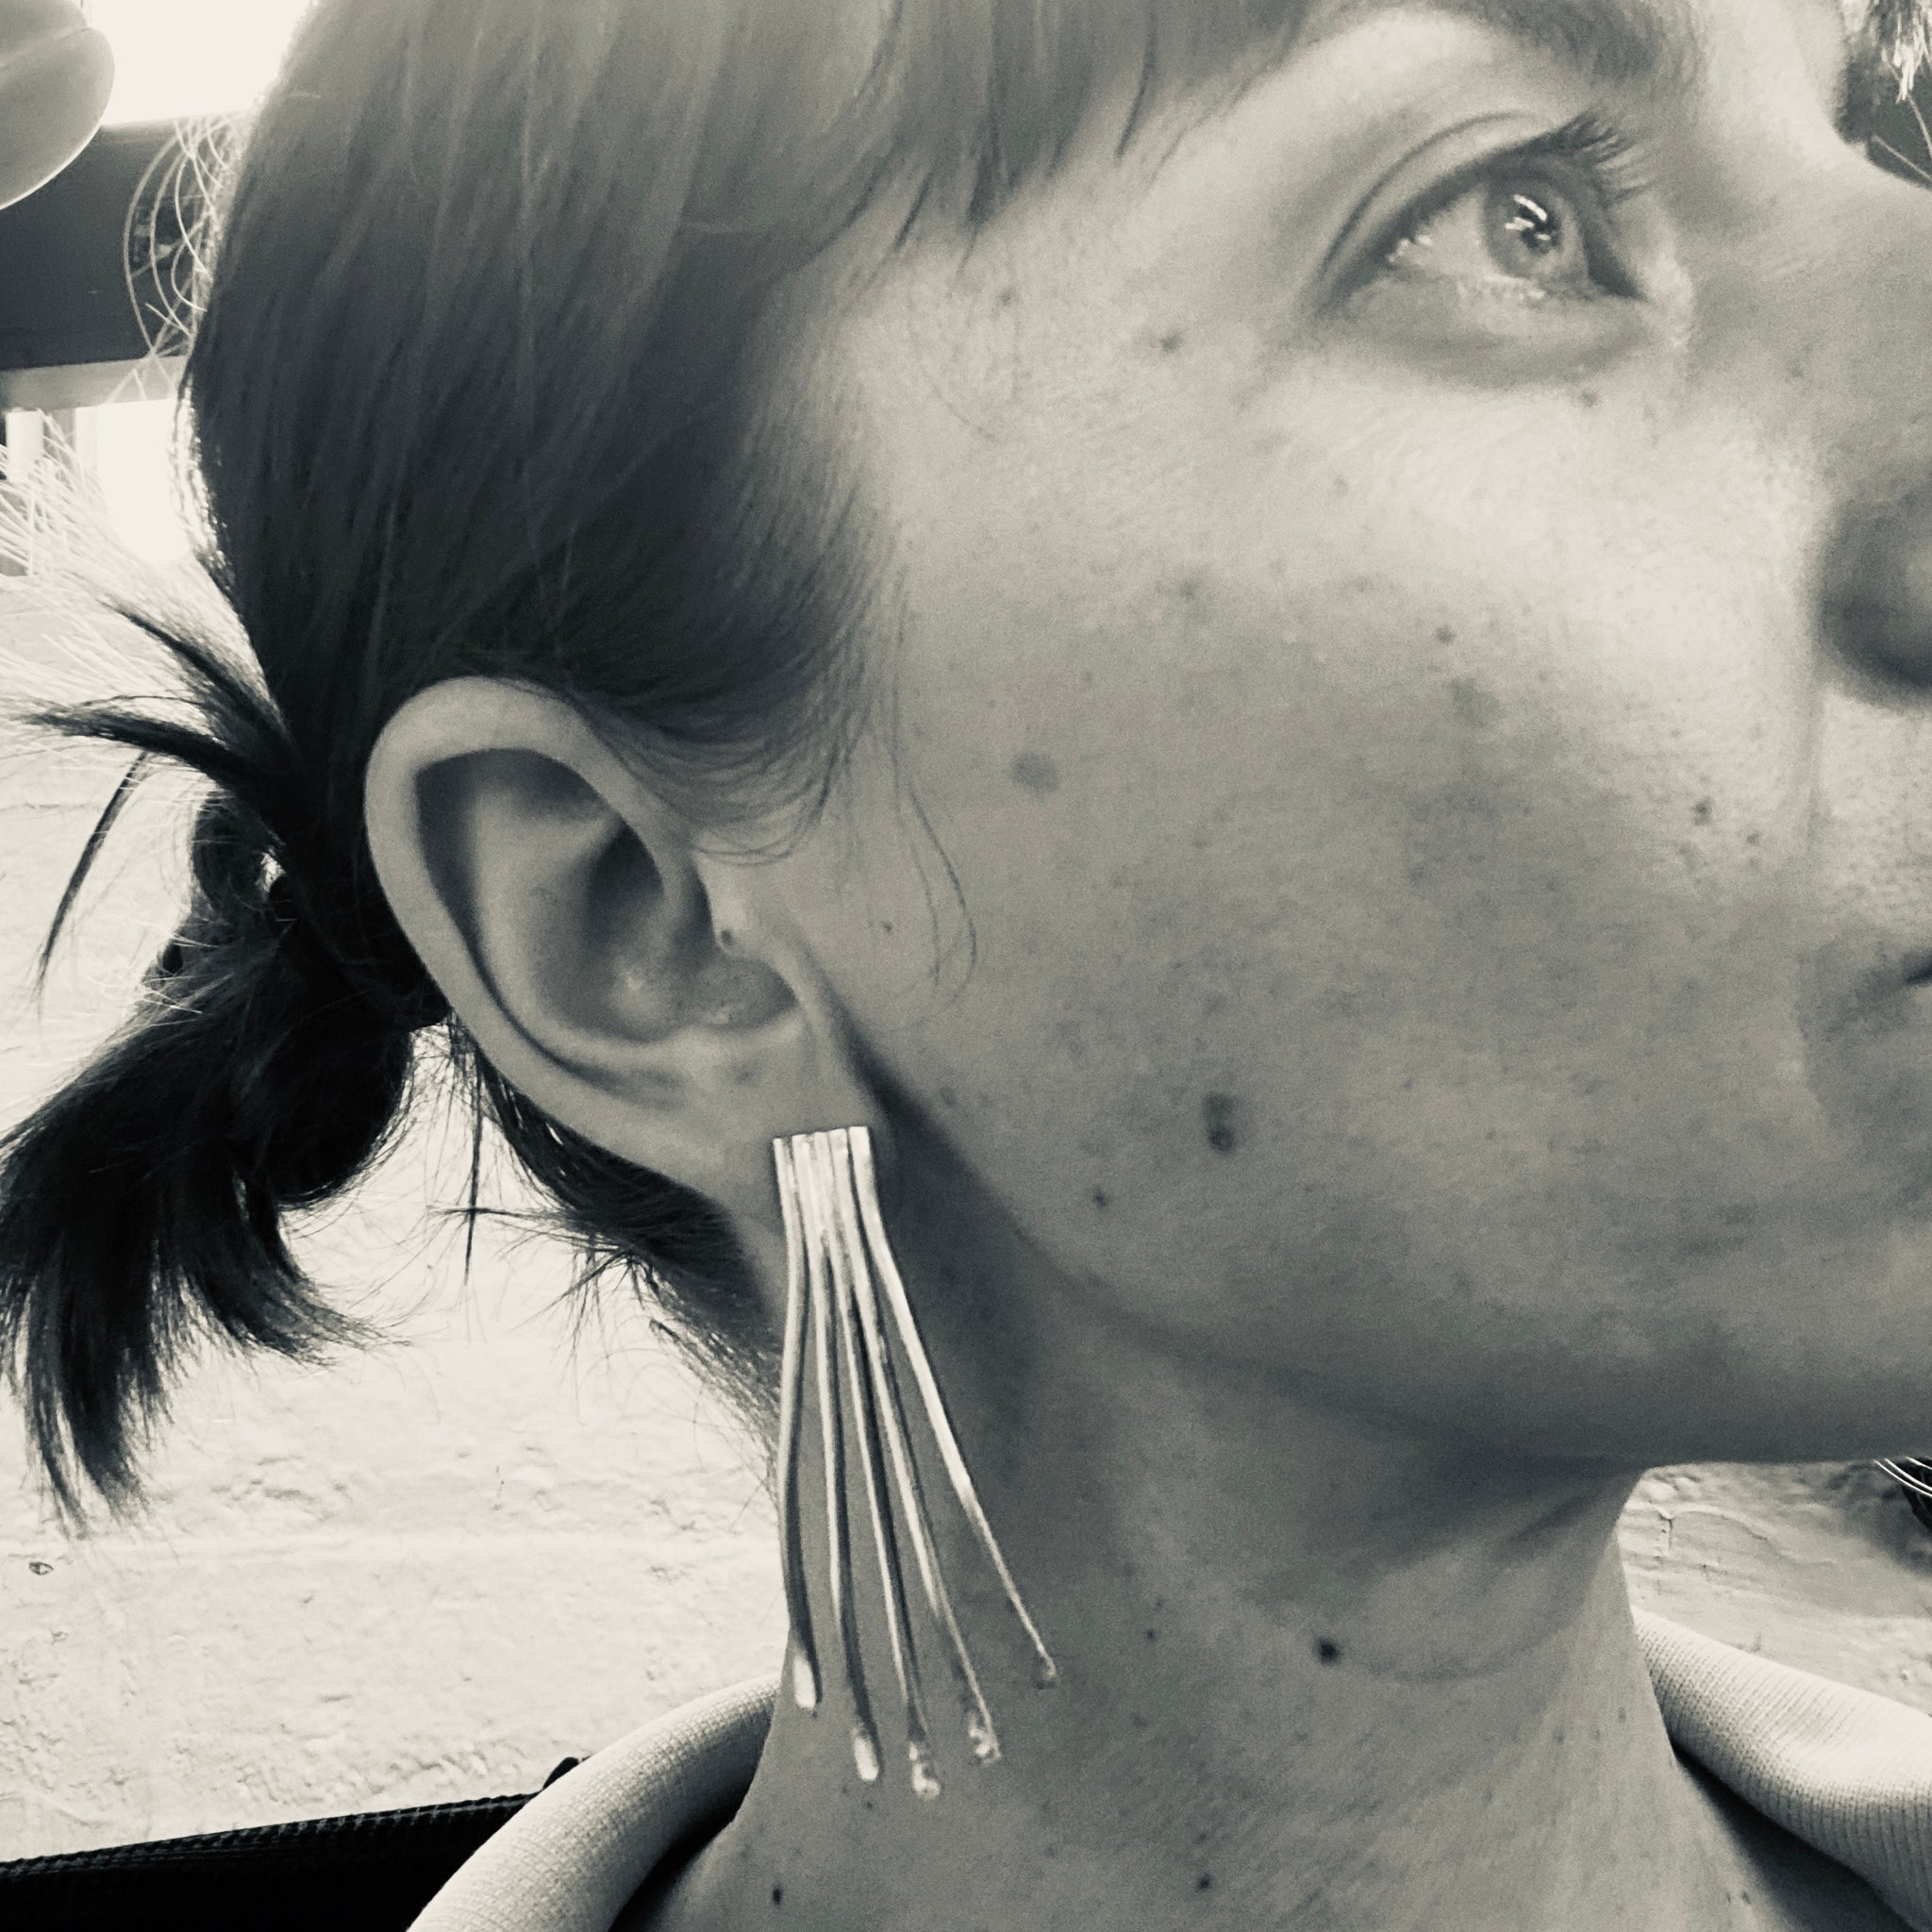 Combing Through post earrings